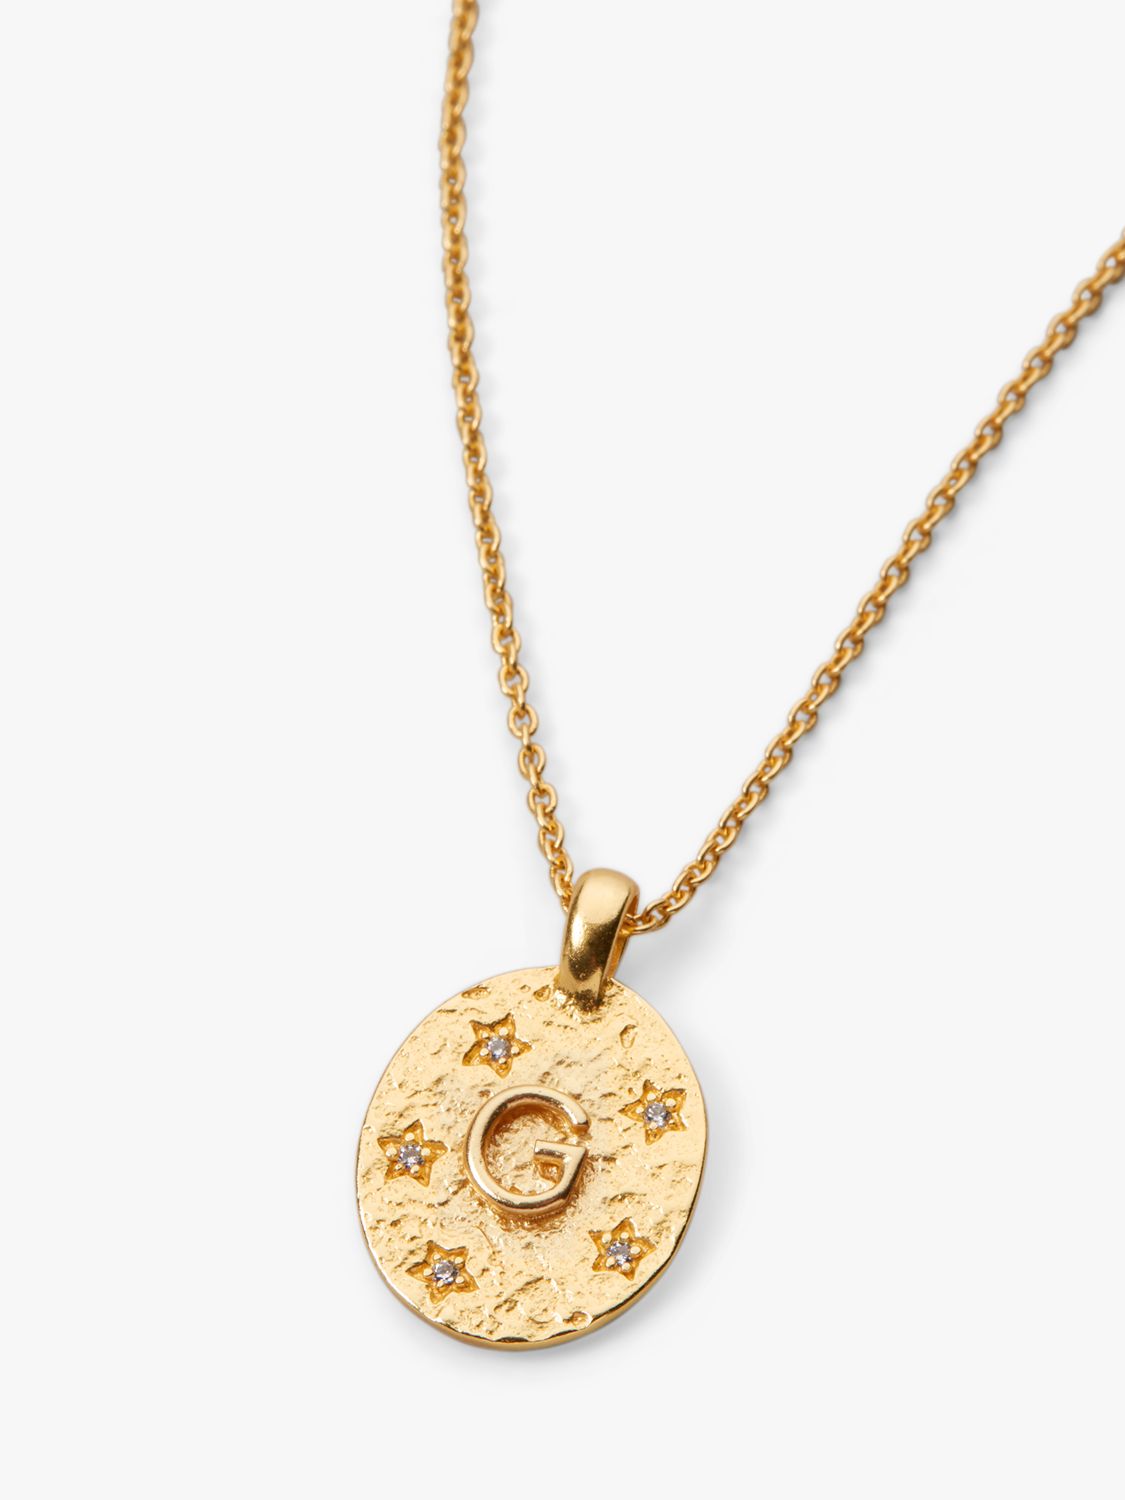 HUSH Cliara Initial Pendant Necklace, Gold, G